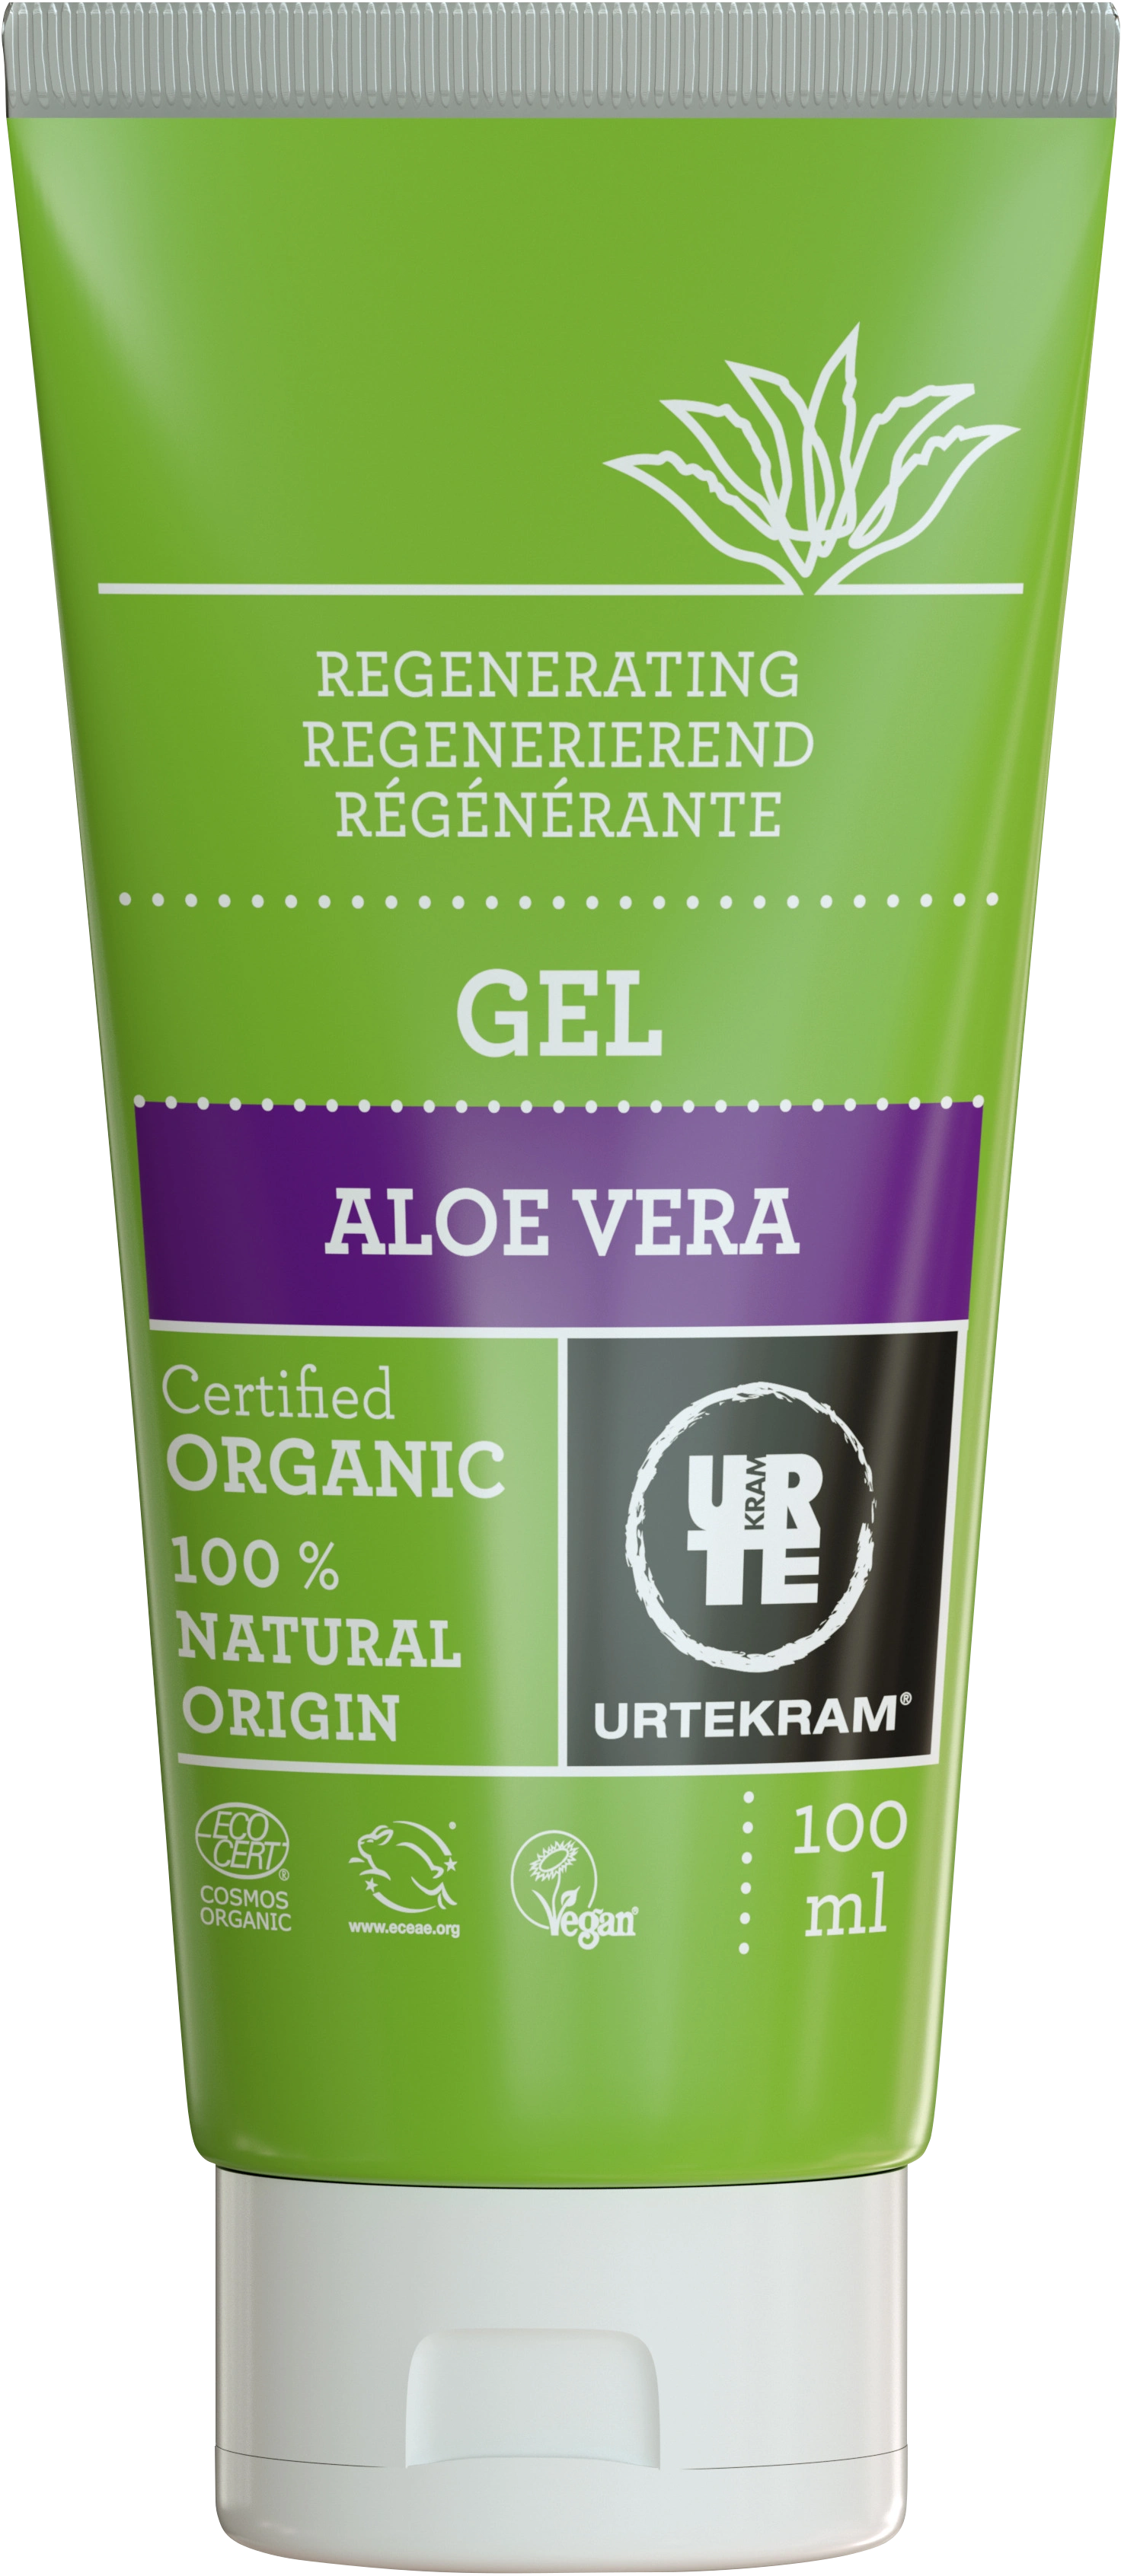 Urtekram Nordic Beauty Urtekram Aloe Vera Gel 100 ml